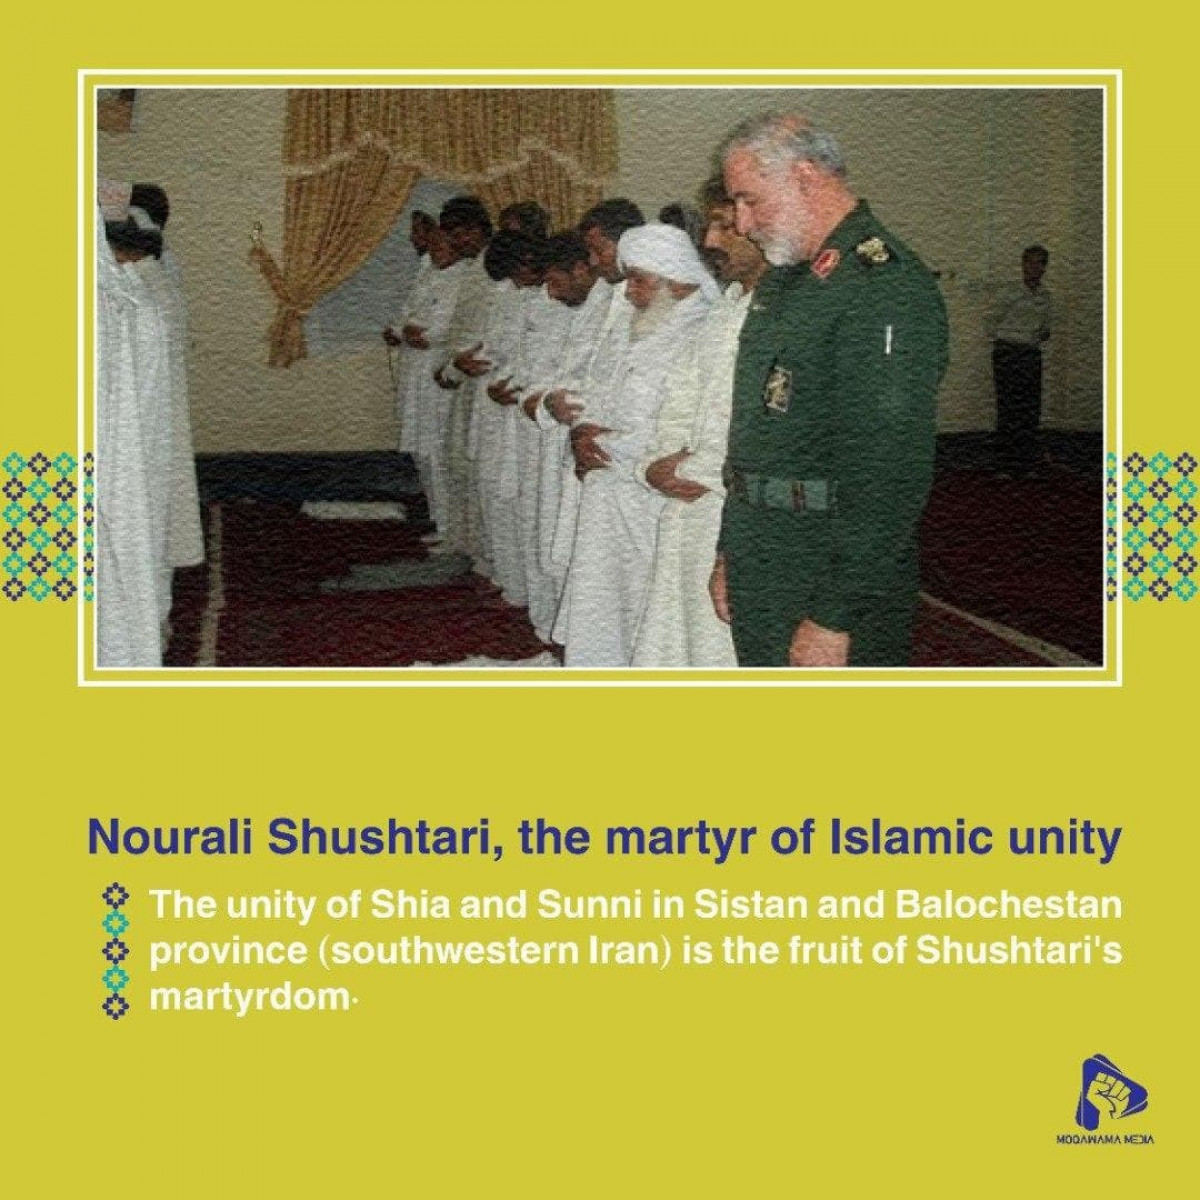 Nourali Shushtari, the martyr of Islamic unity